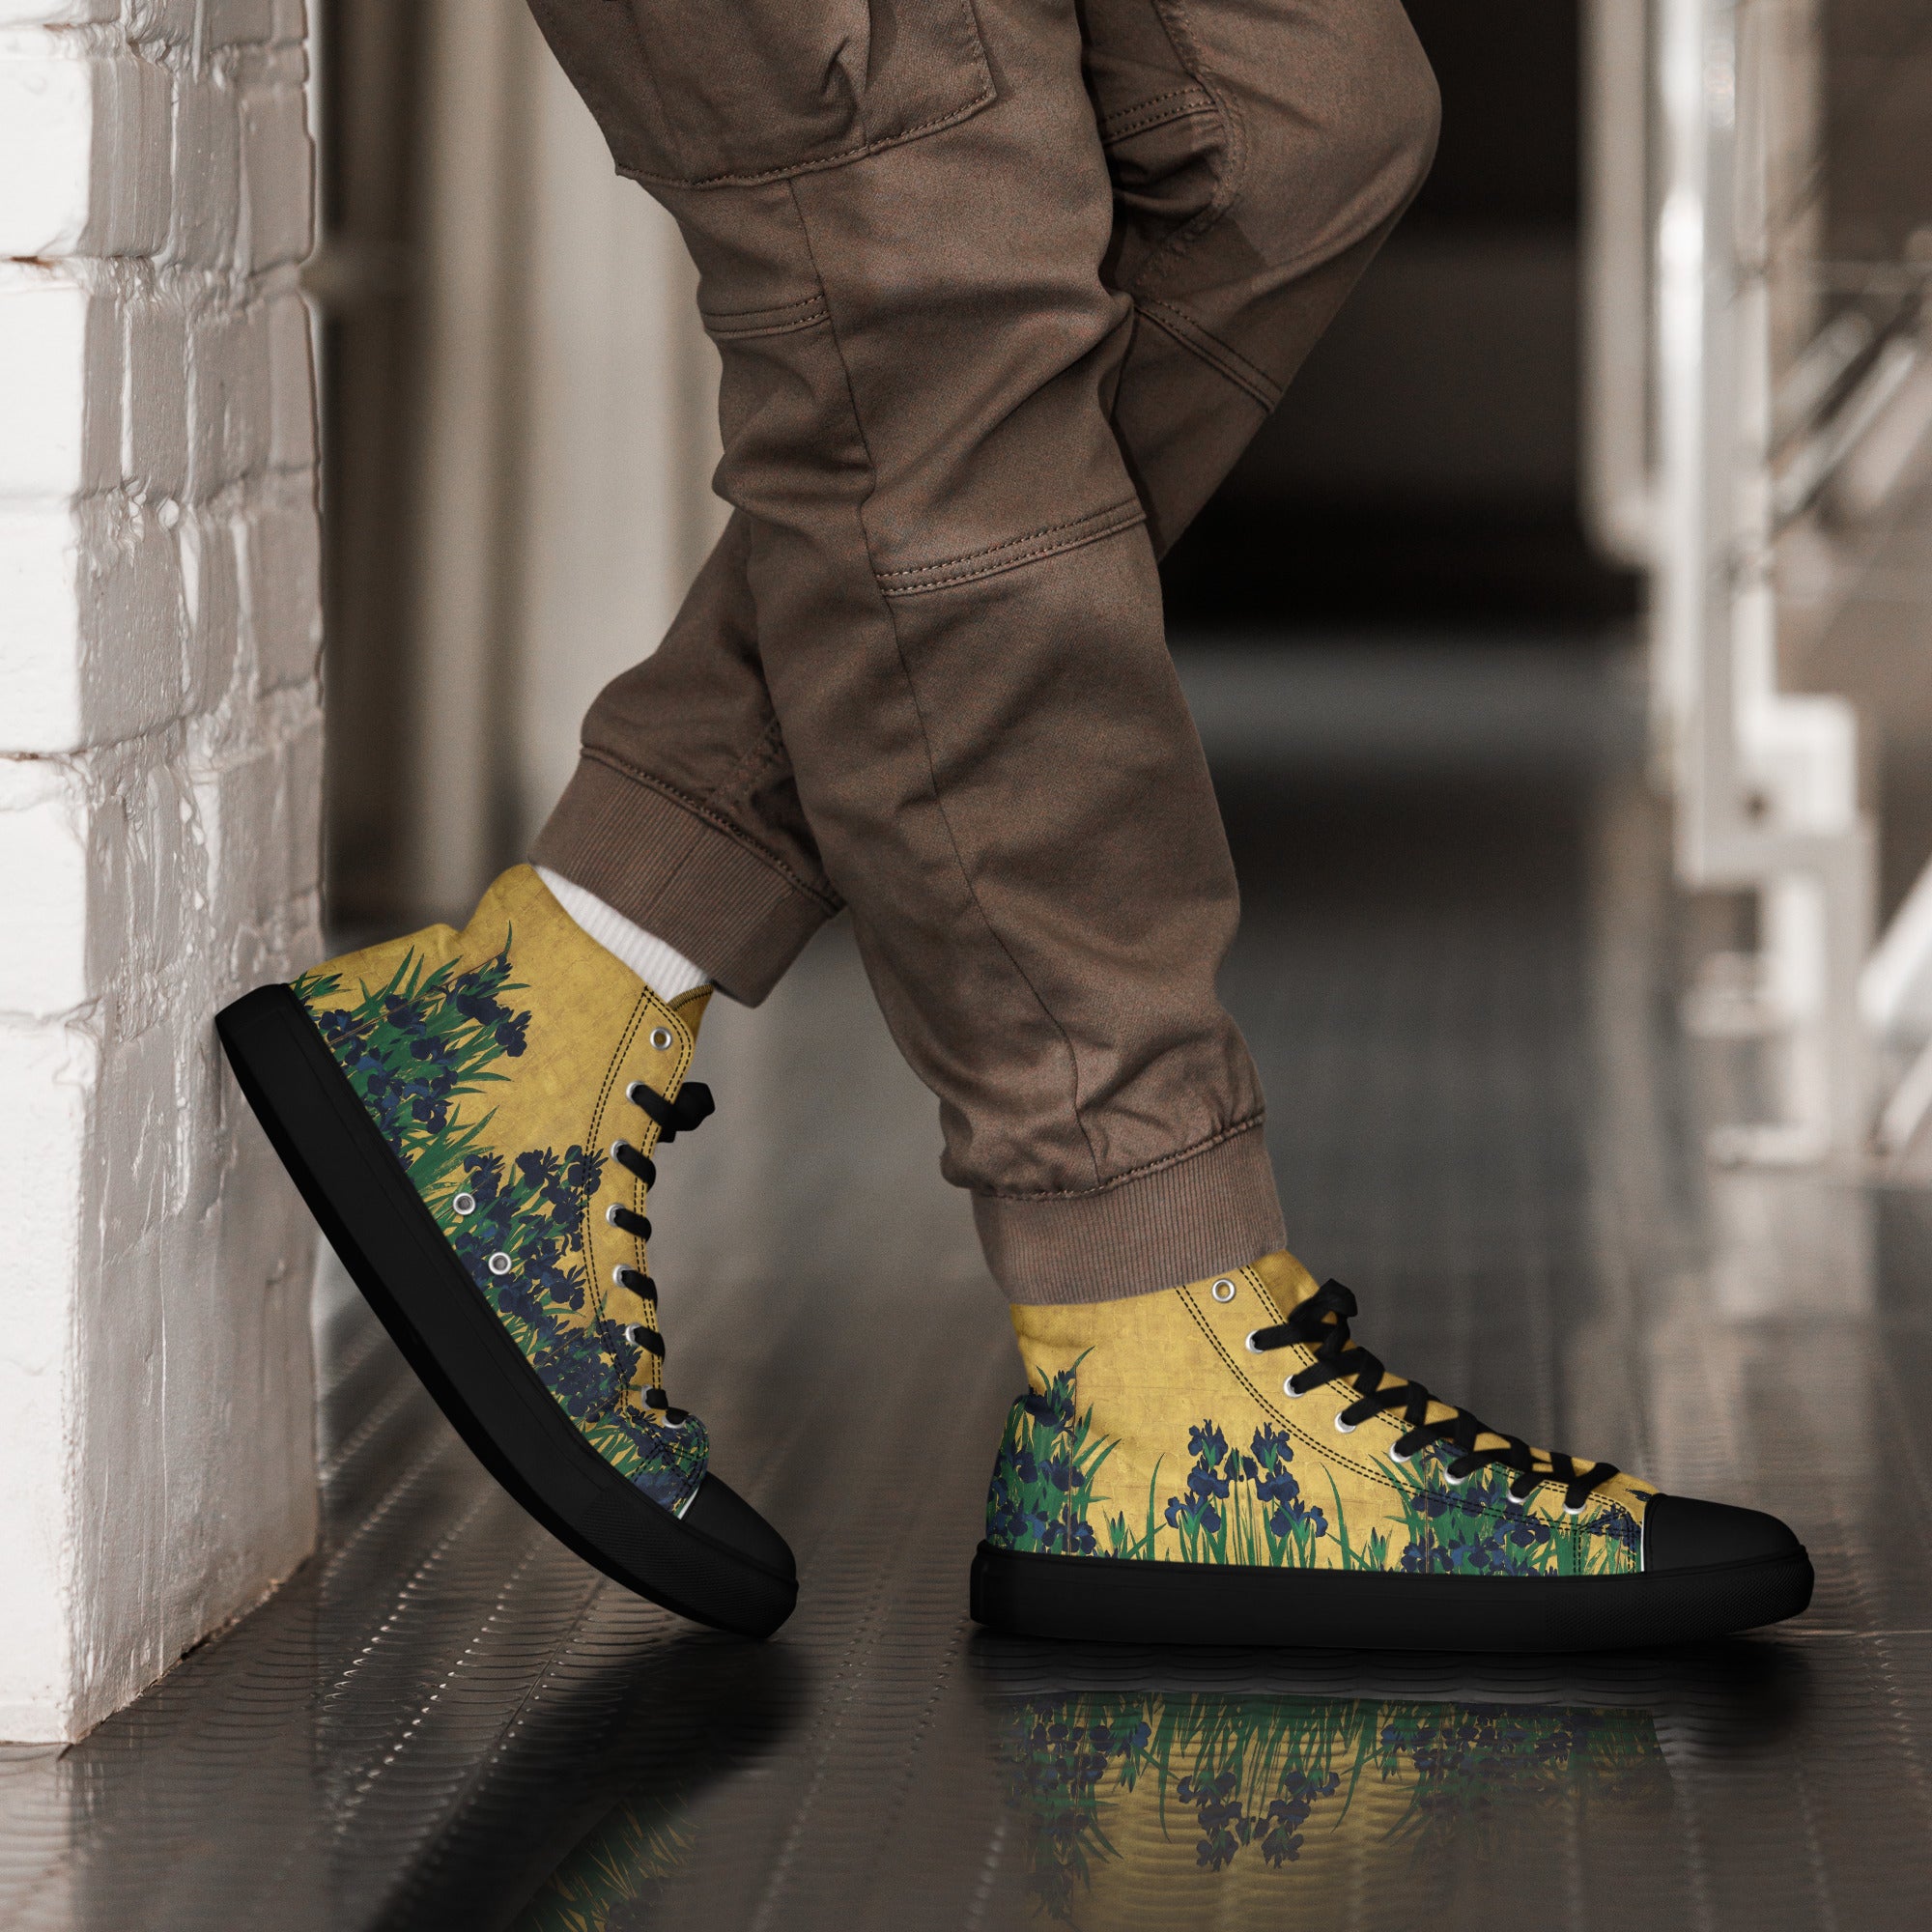 Ogata Kōrin ‘Irises’ High Top Shoes | Premium Art High Top Sneakers for Men